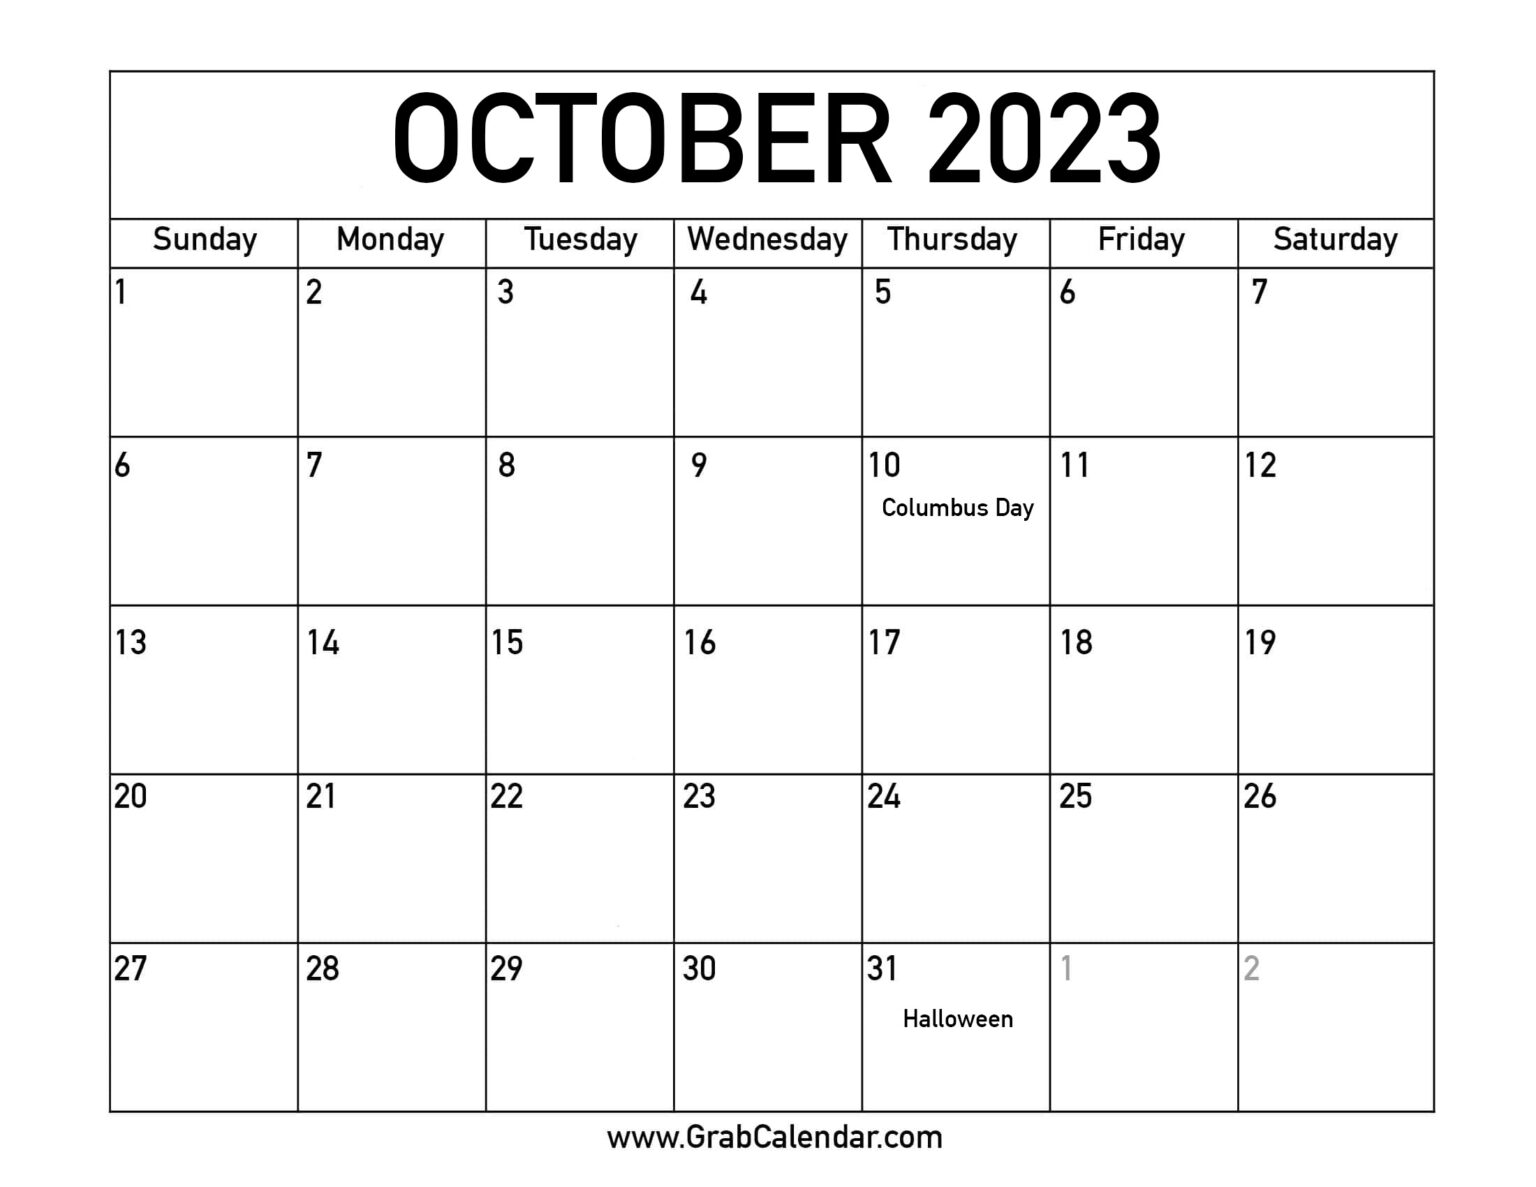 october-2018-calendar-monthly-printable-october-calendar-november